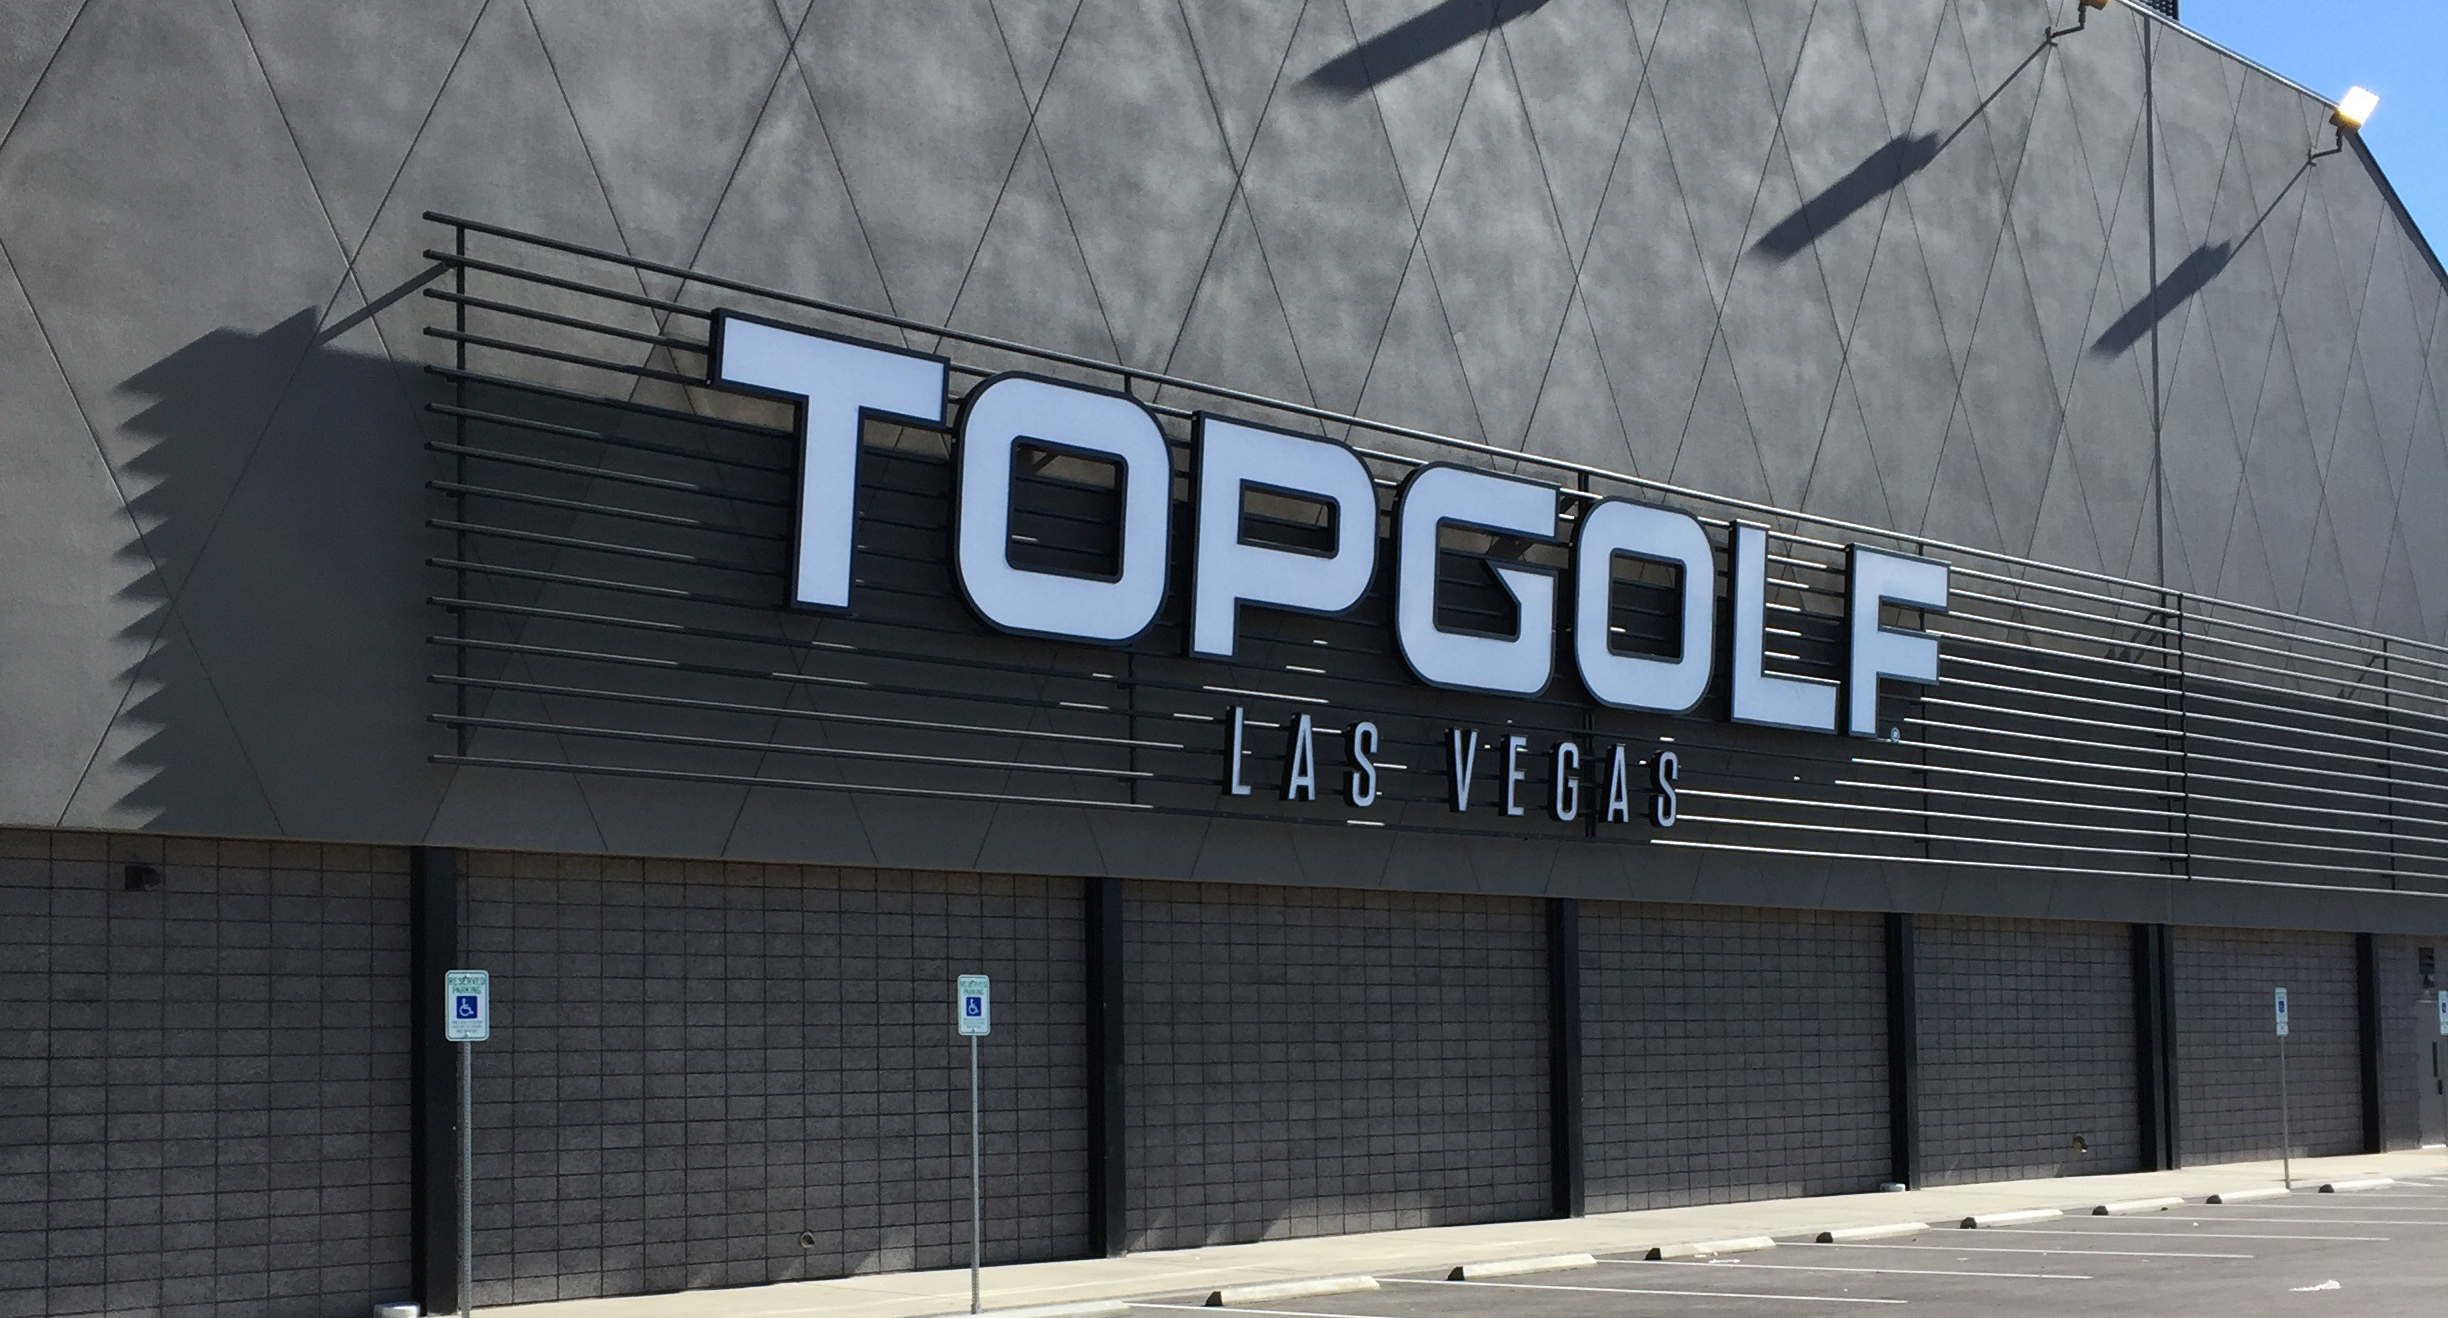 Topgolf Las Vegas Hits a Hole-in-One - Hörmann